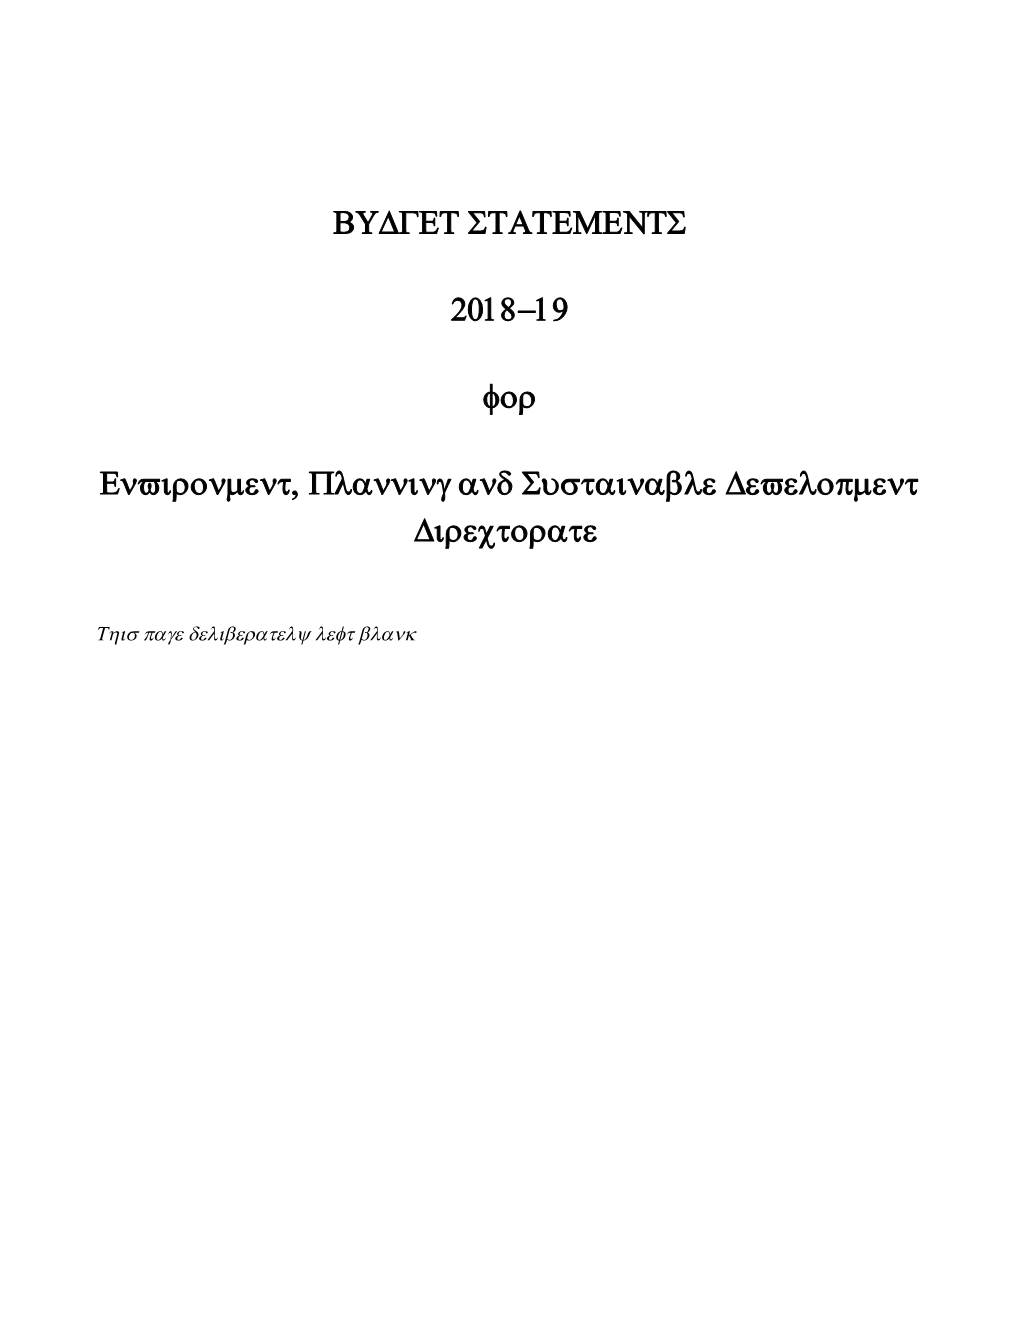 ACT Budget 2018-19. Budget Statements E